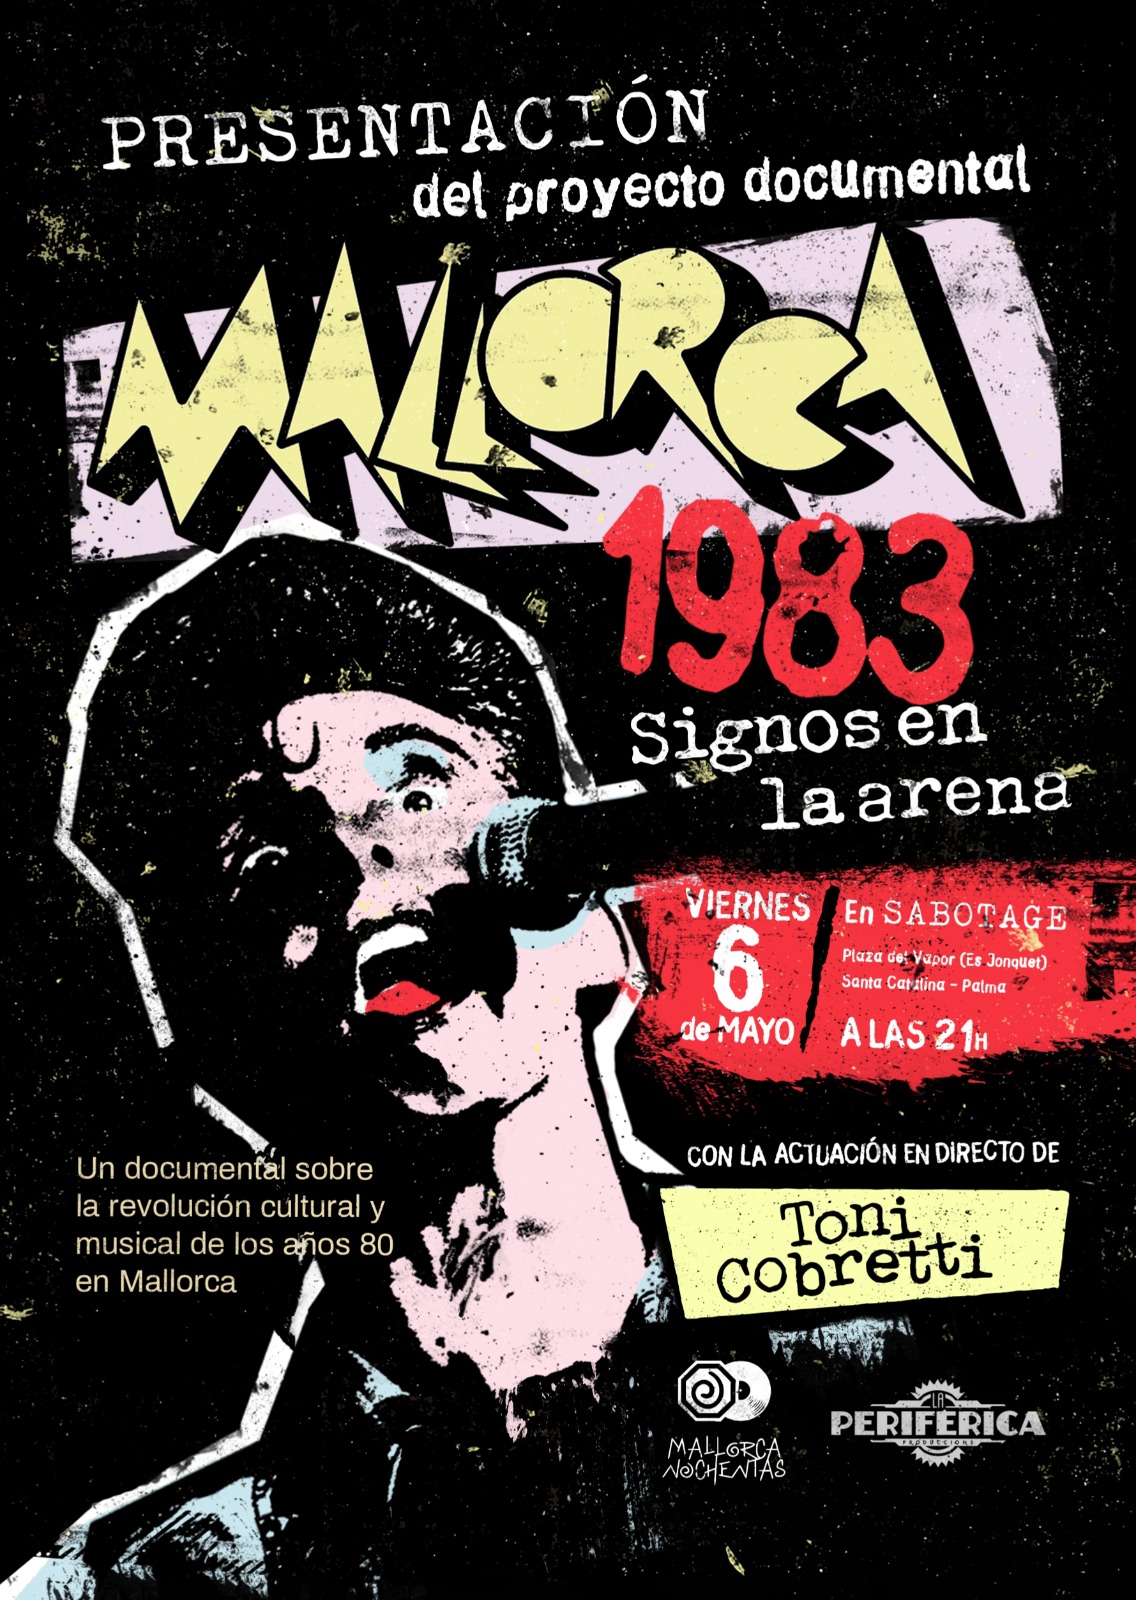 Mallorca 1983